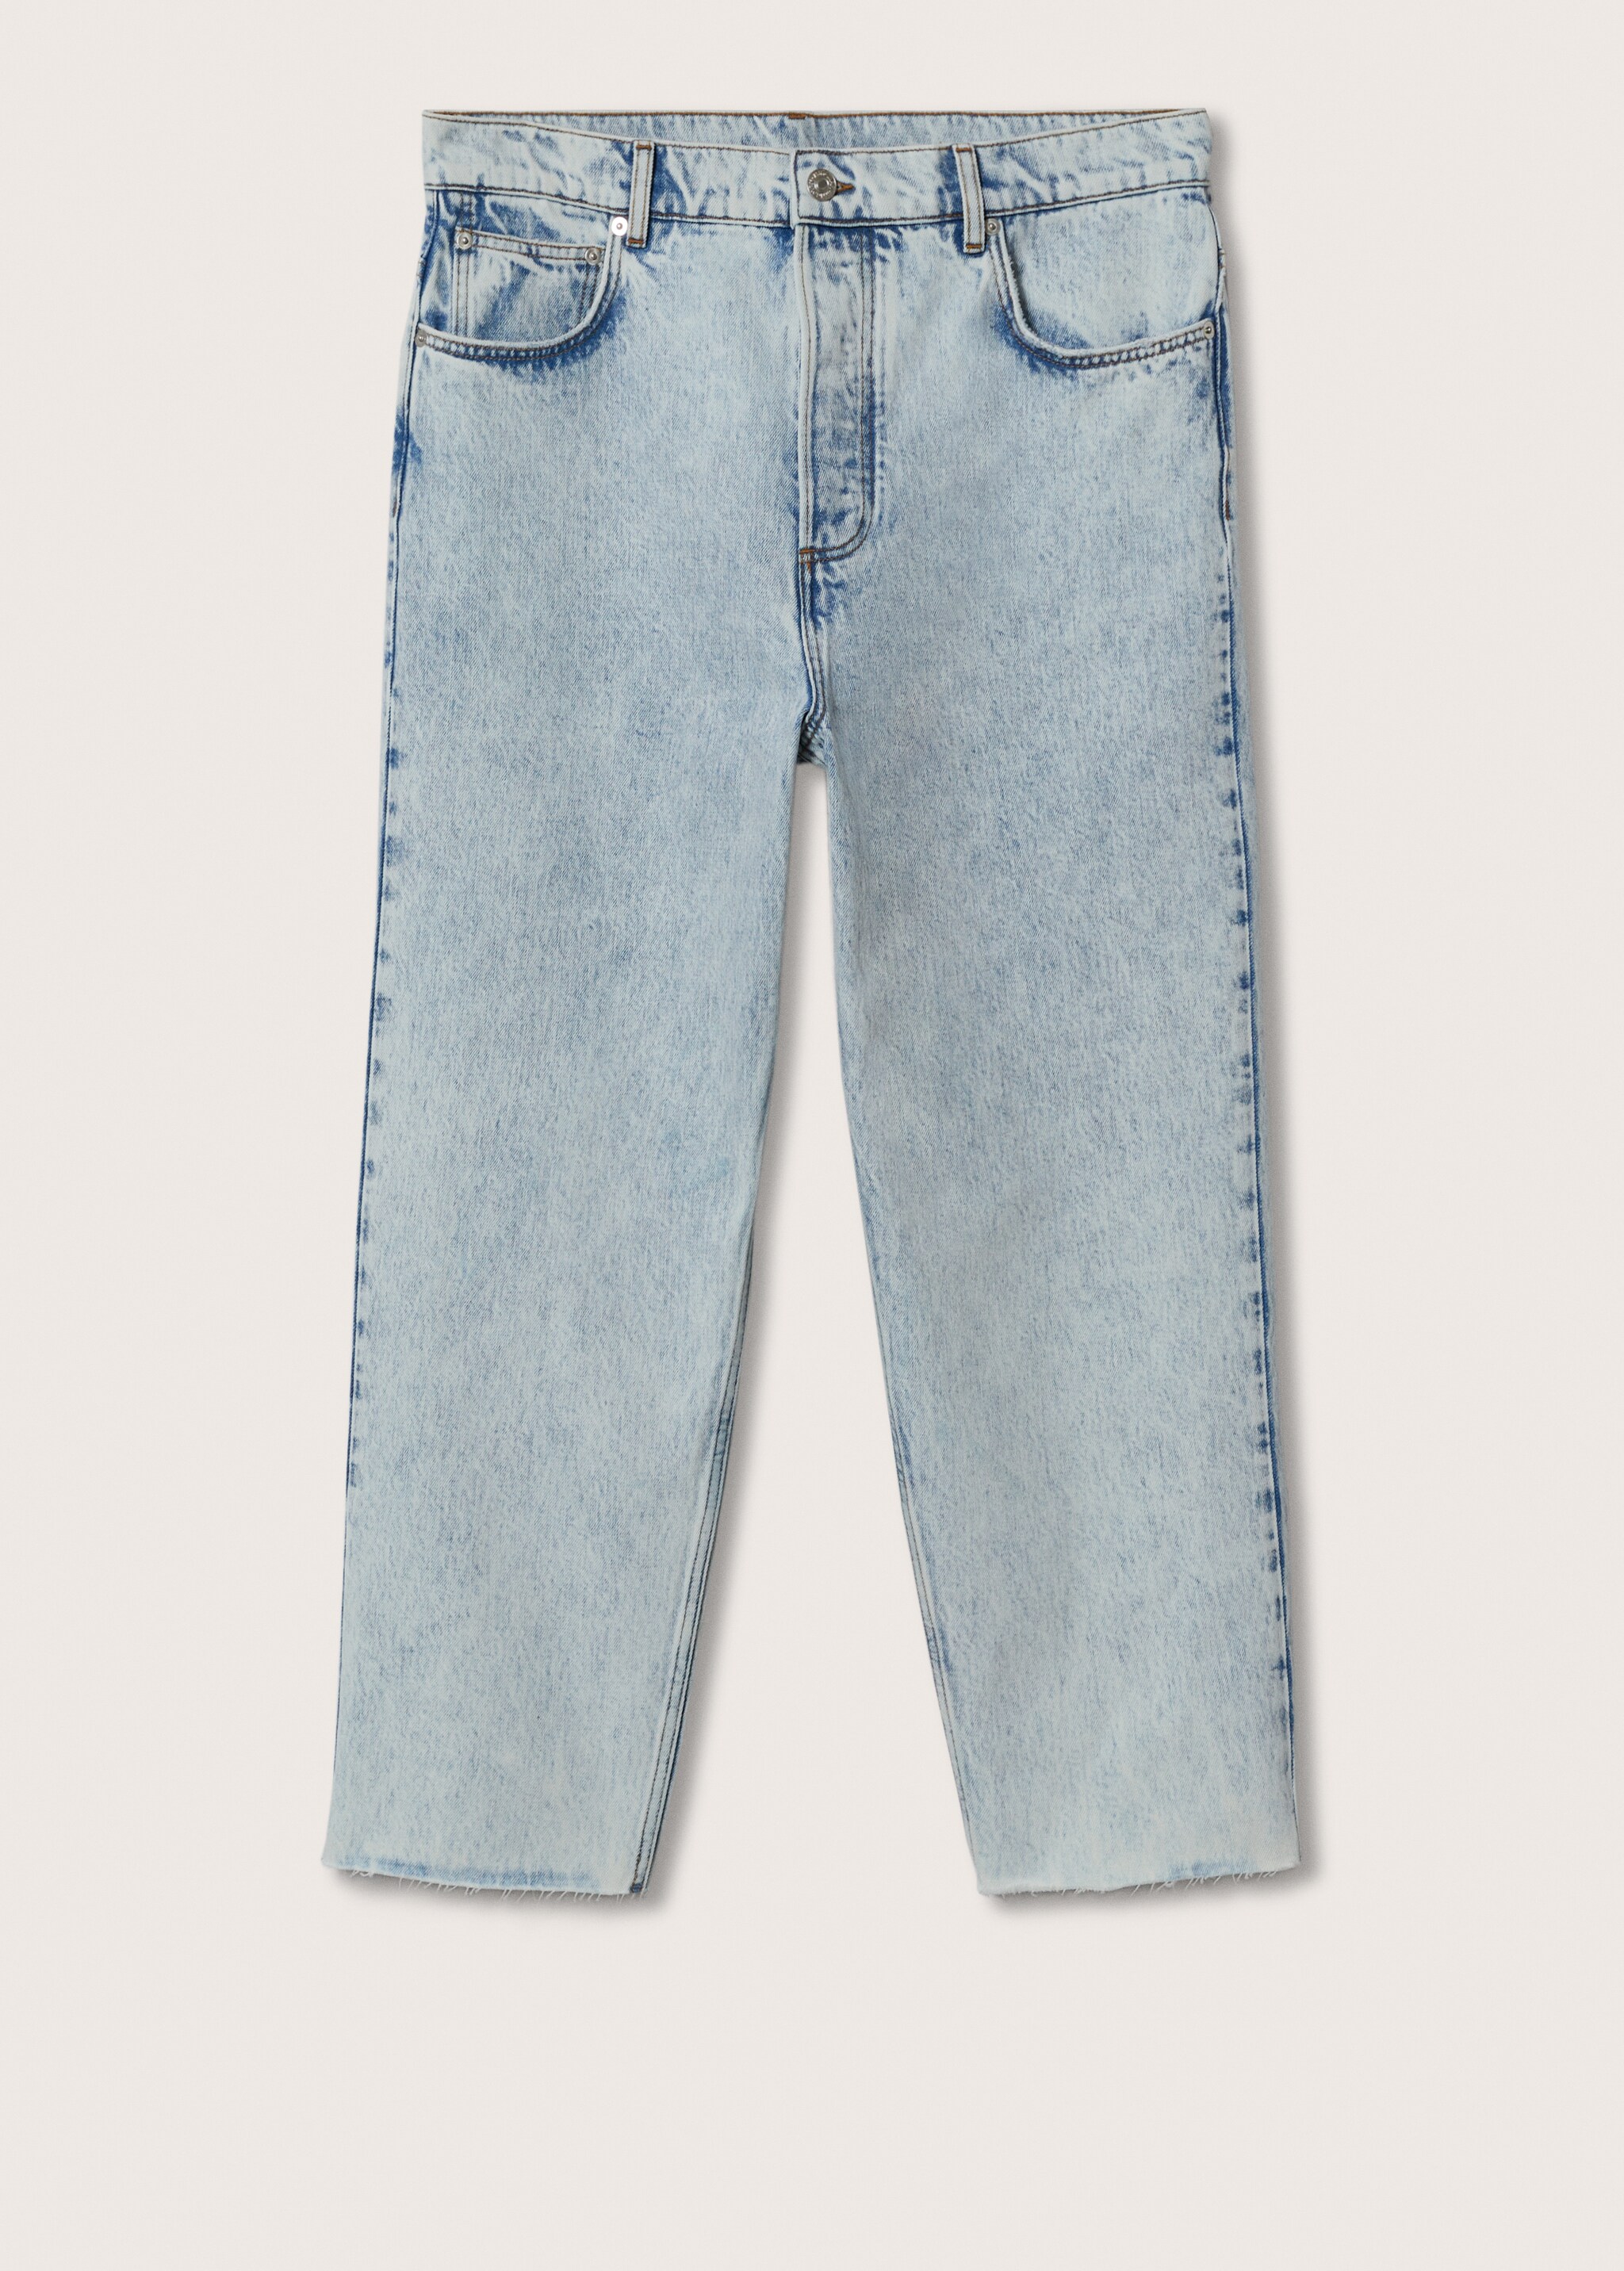 Jeans tapered loose cropped - Artikel utan modell